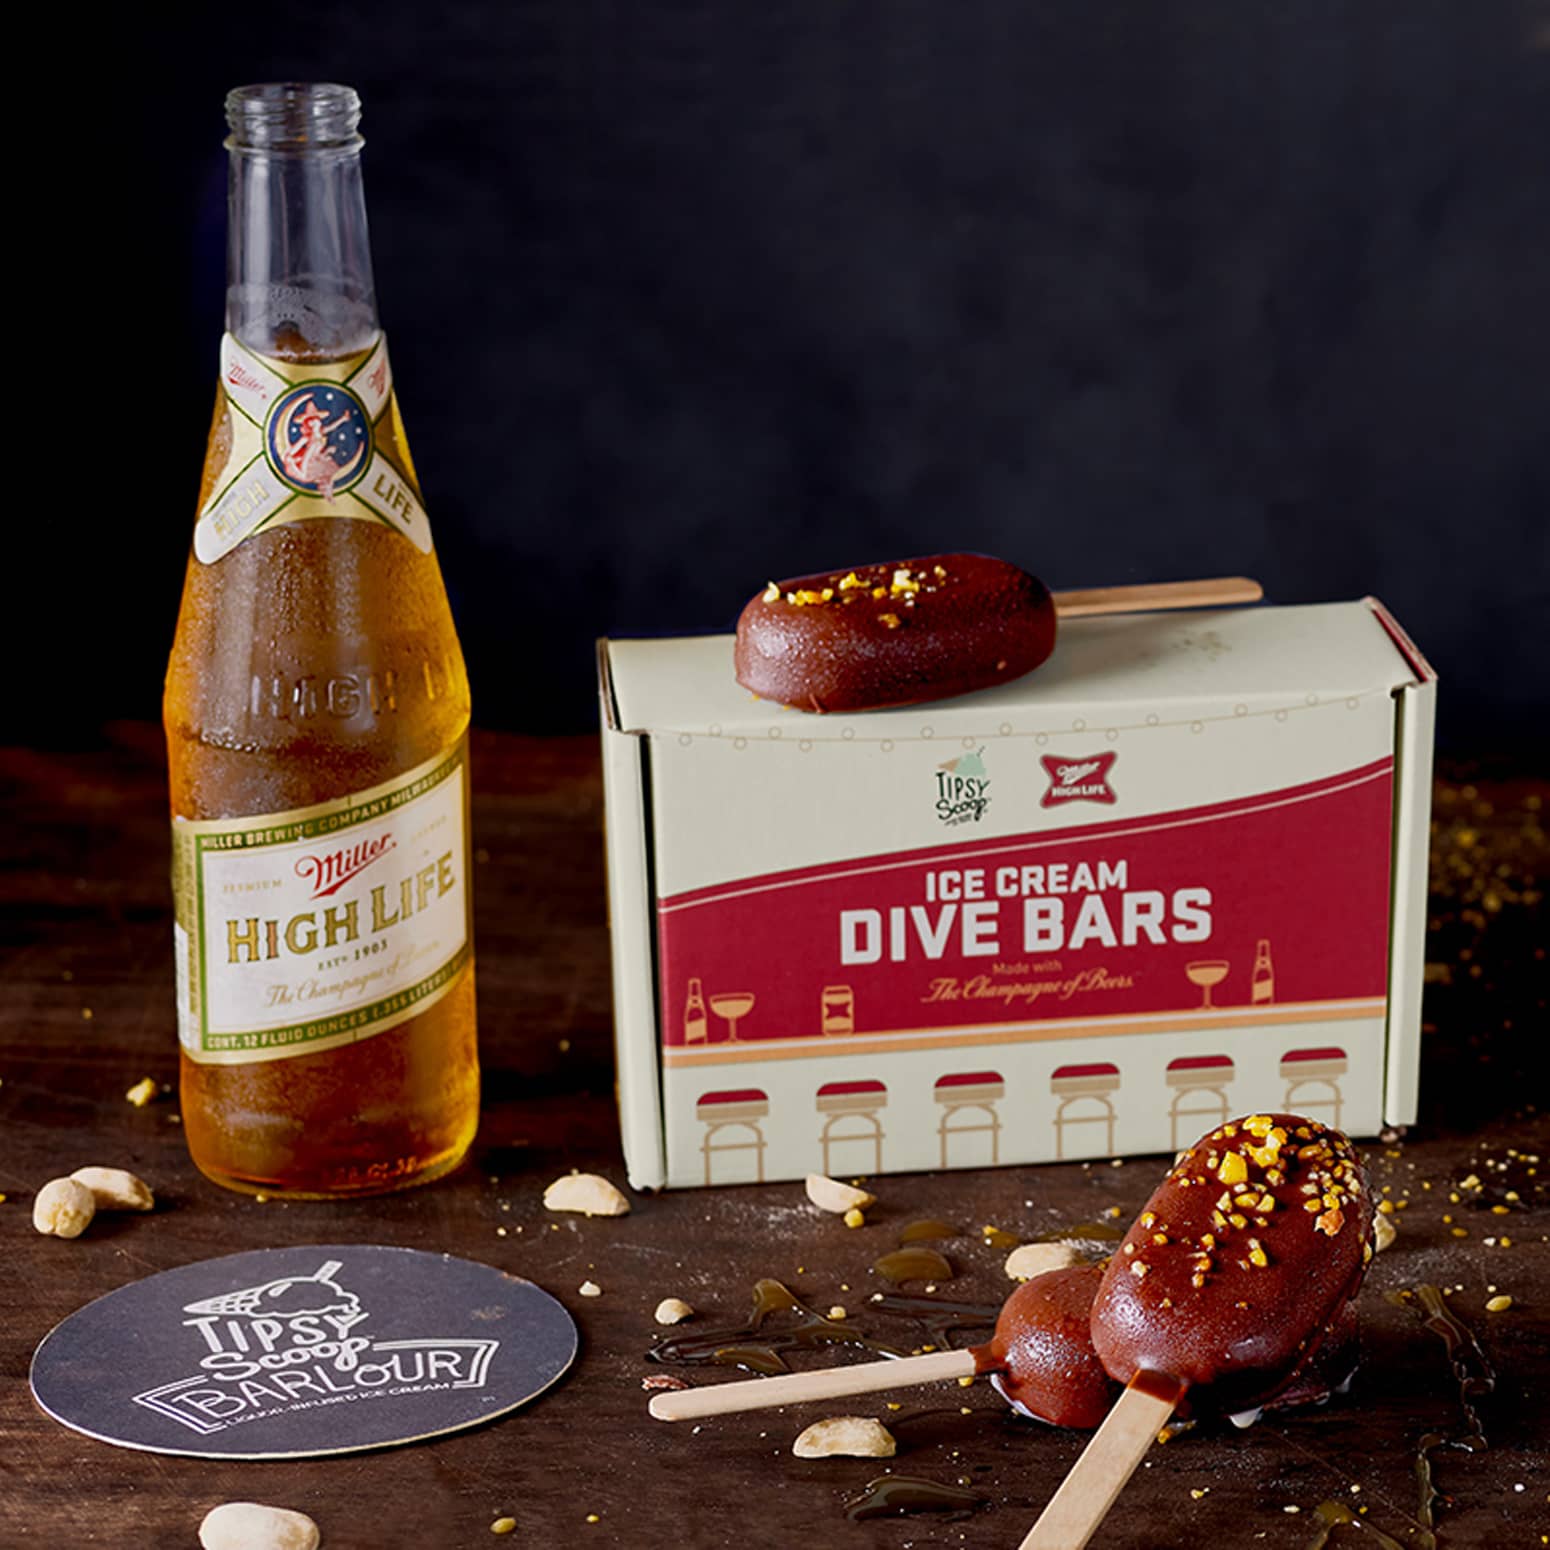 Miller High Life Dive Bar Ice Cream Bars